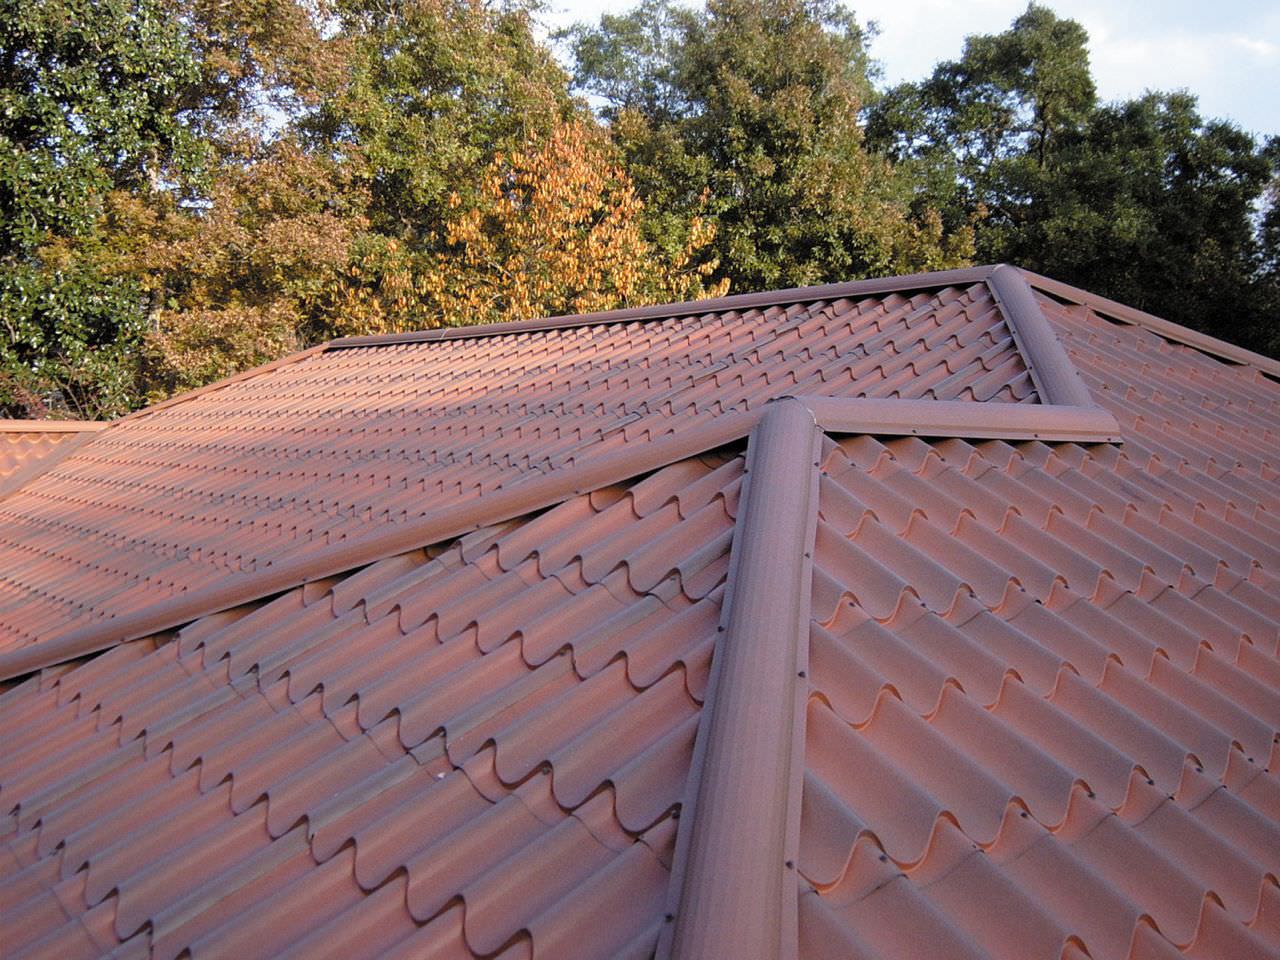 Steel Roofing Tile